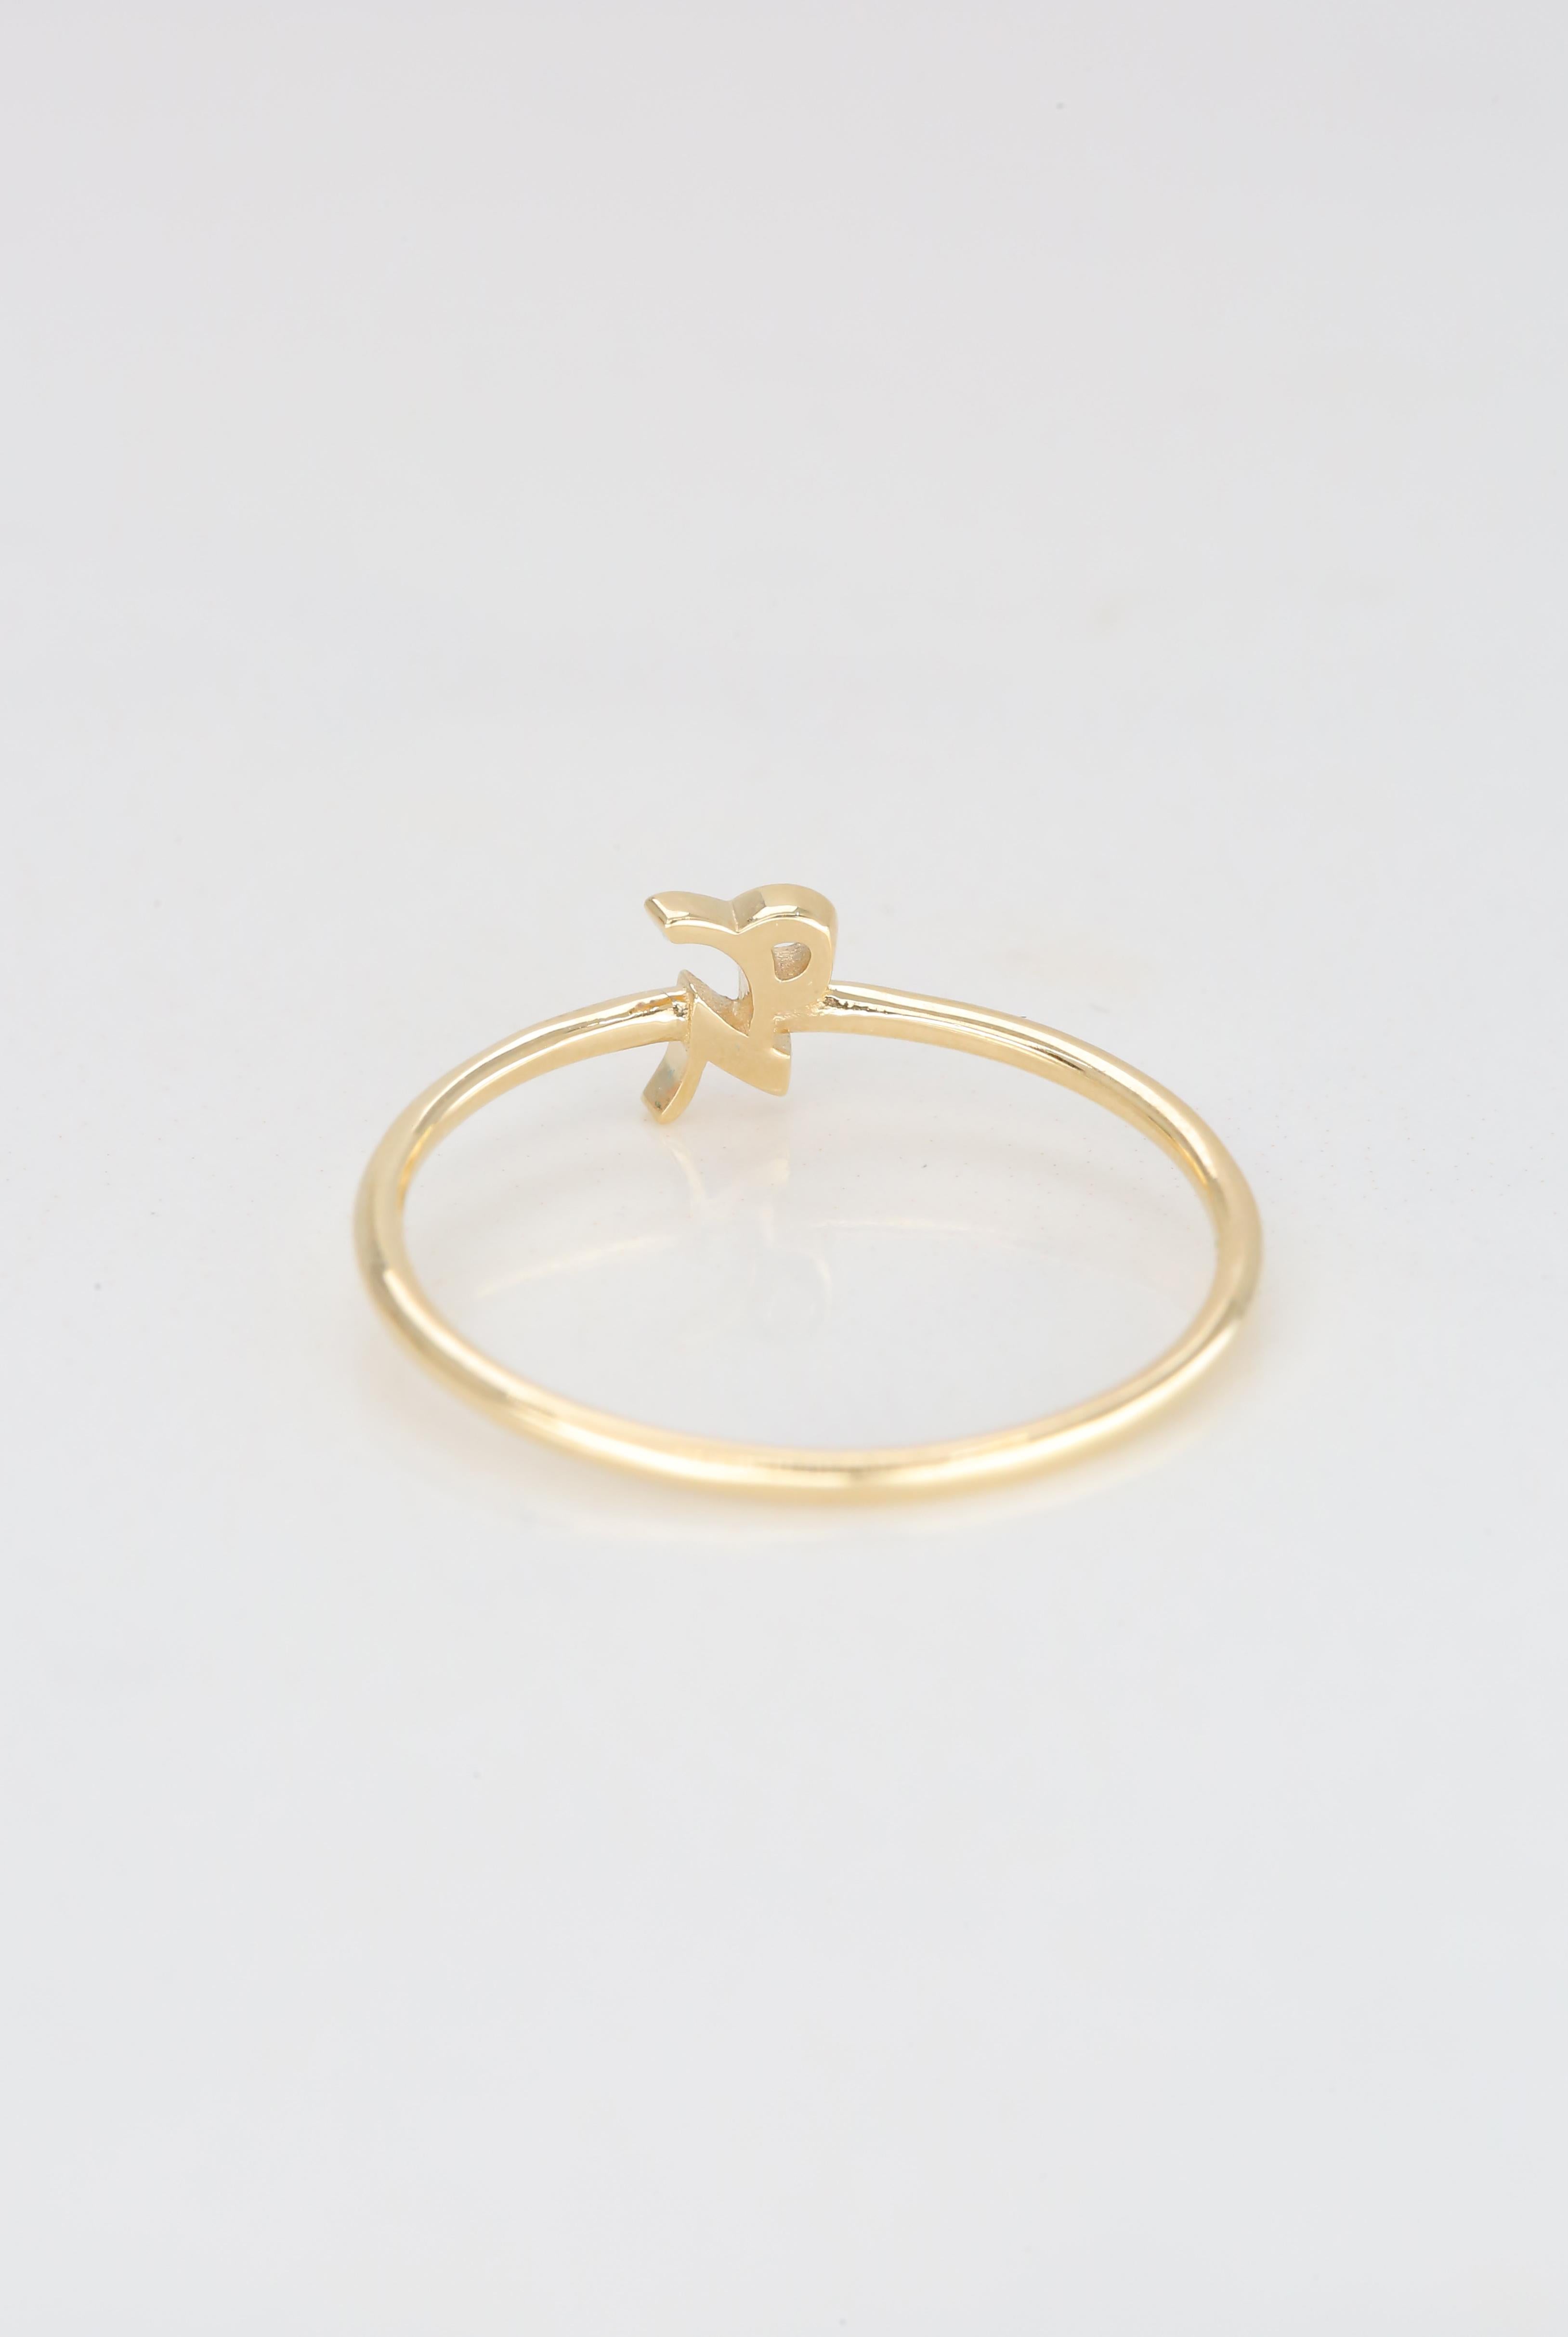 For Sale:  14K Gold Capricorn Ring, Capricorn Sign Gold Ring 6